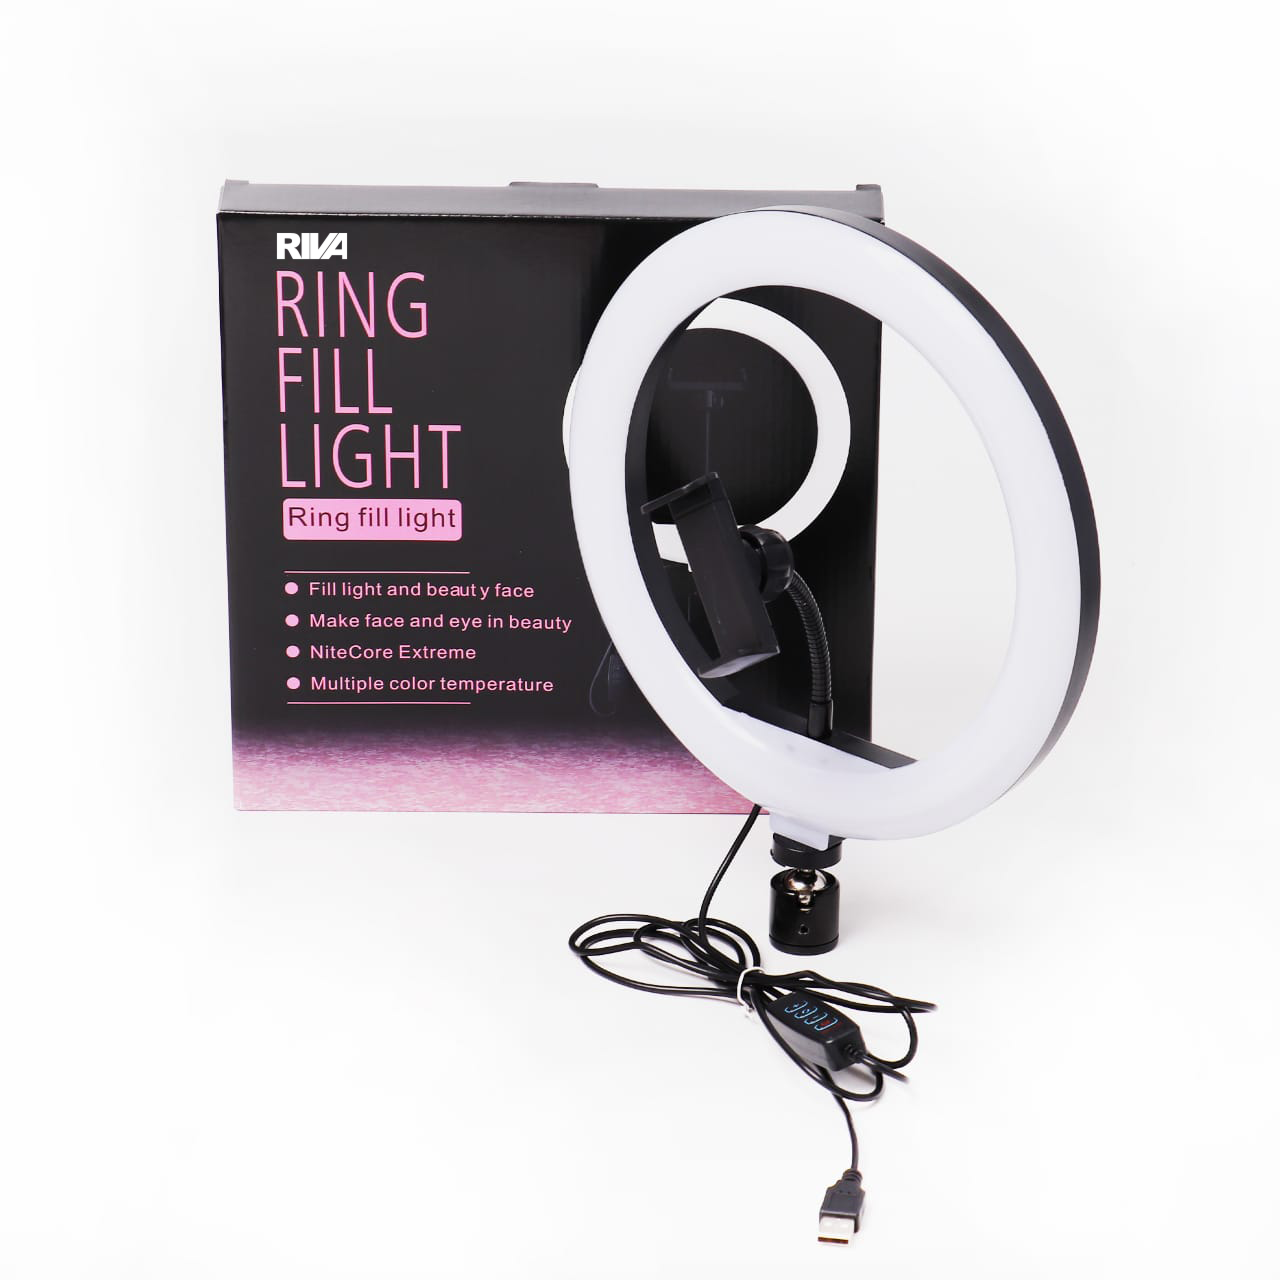 Riva LED Ring Light price in Pakistan